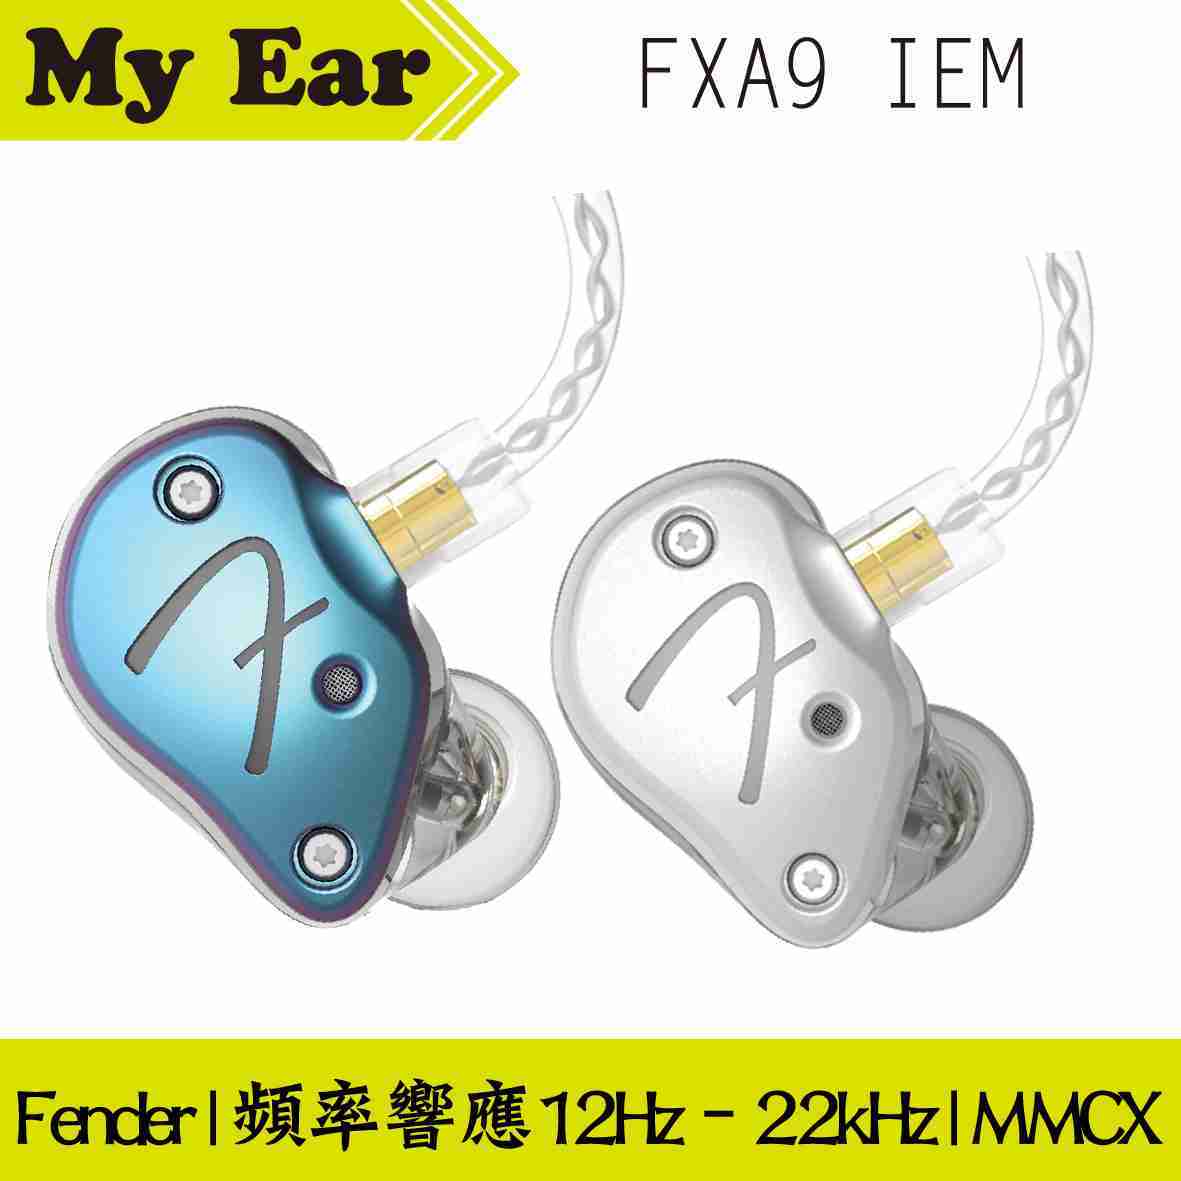 Fender FXA9 IEM 變色龍漸變 入耳式 監聽級 耳機 | My Ear耳機專門店